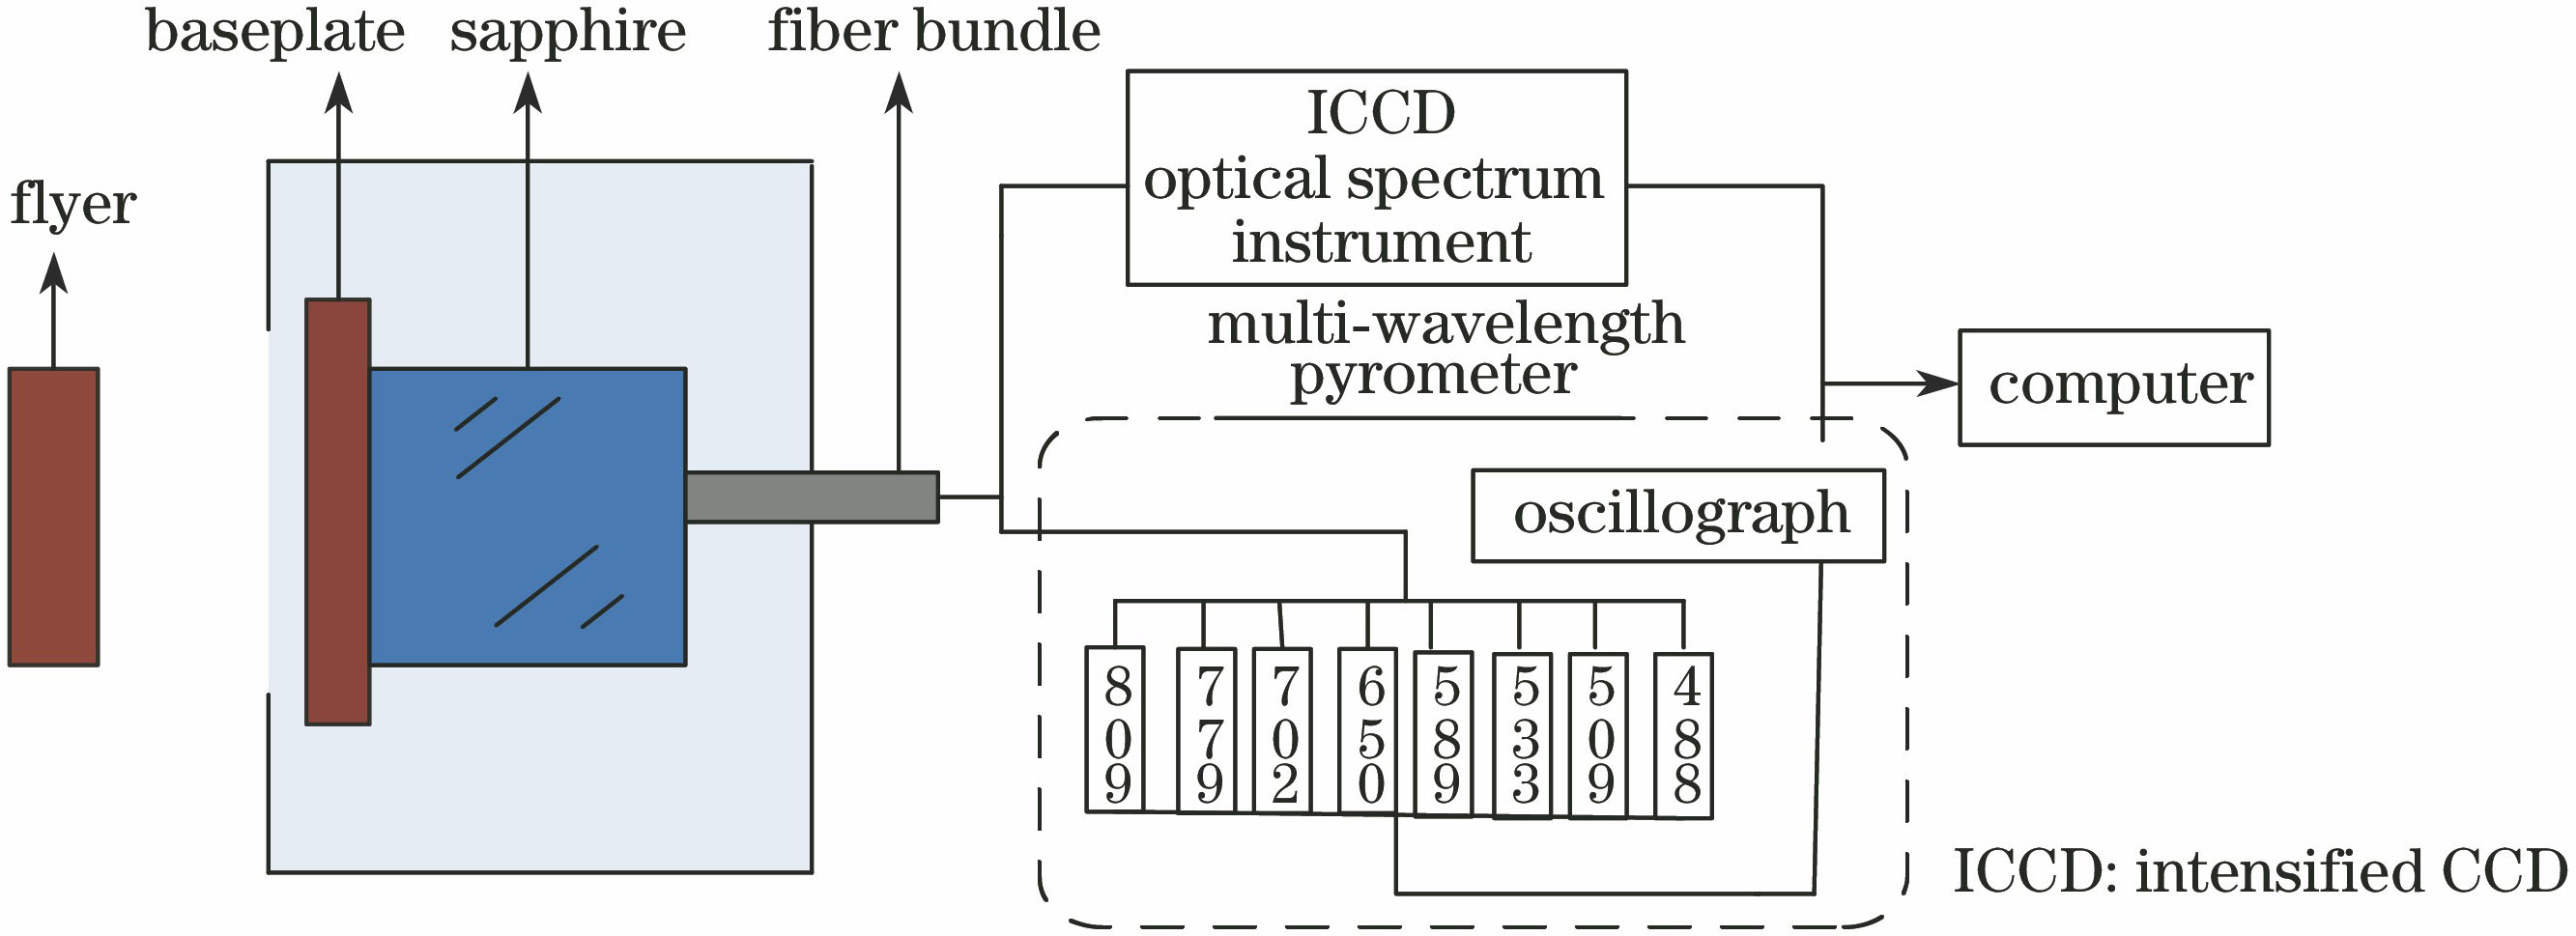 Structure schematic of spectrum measurement system